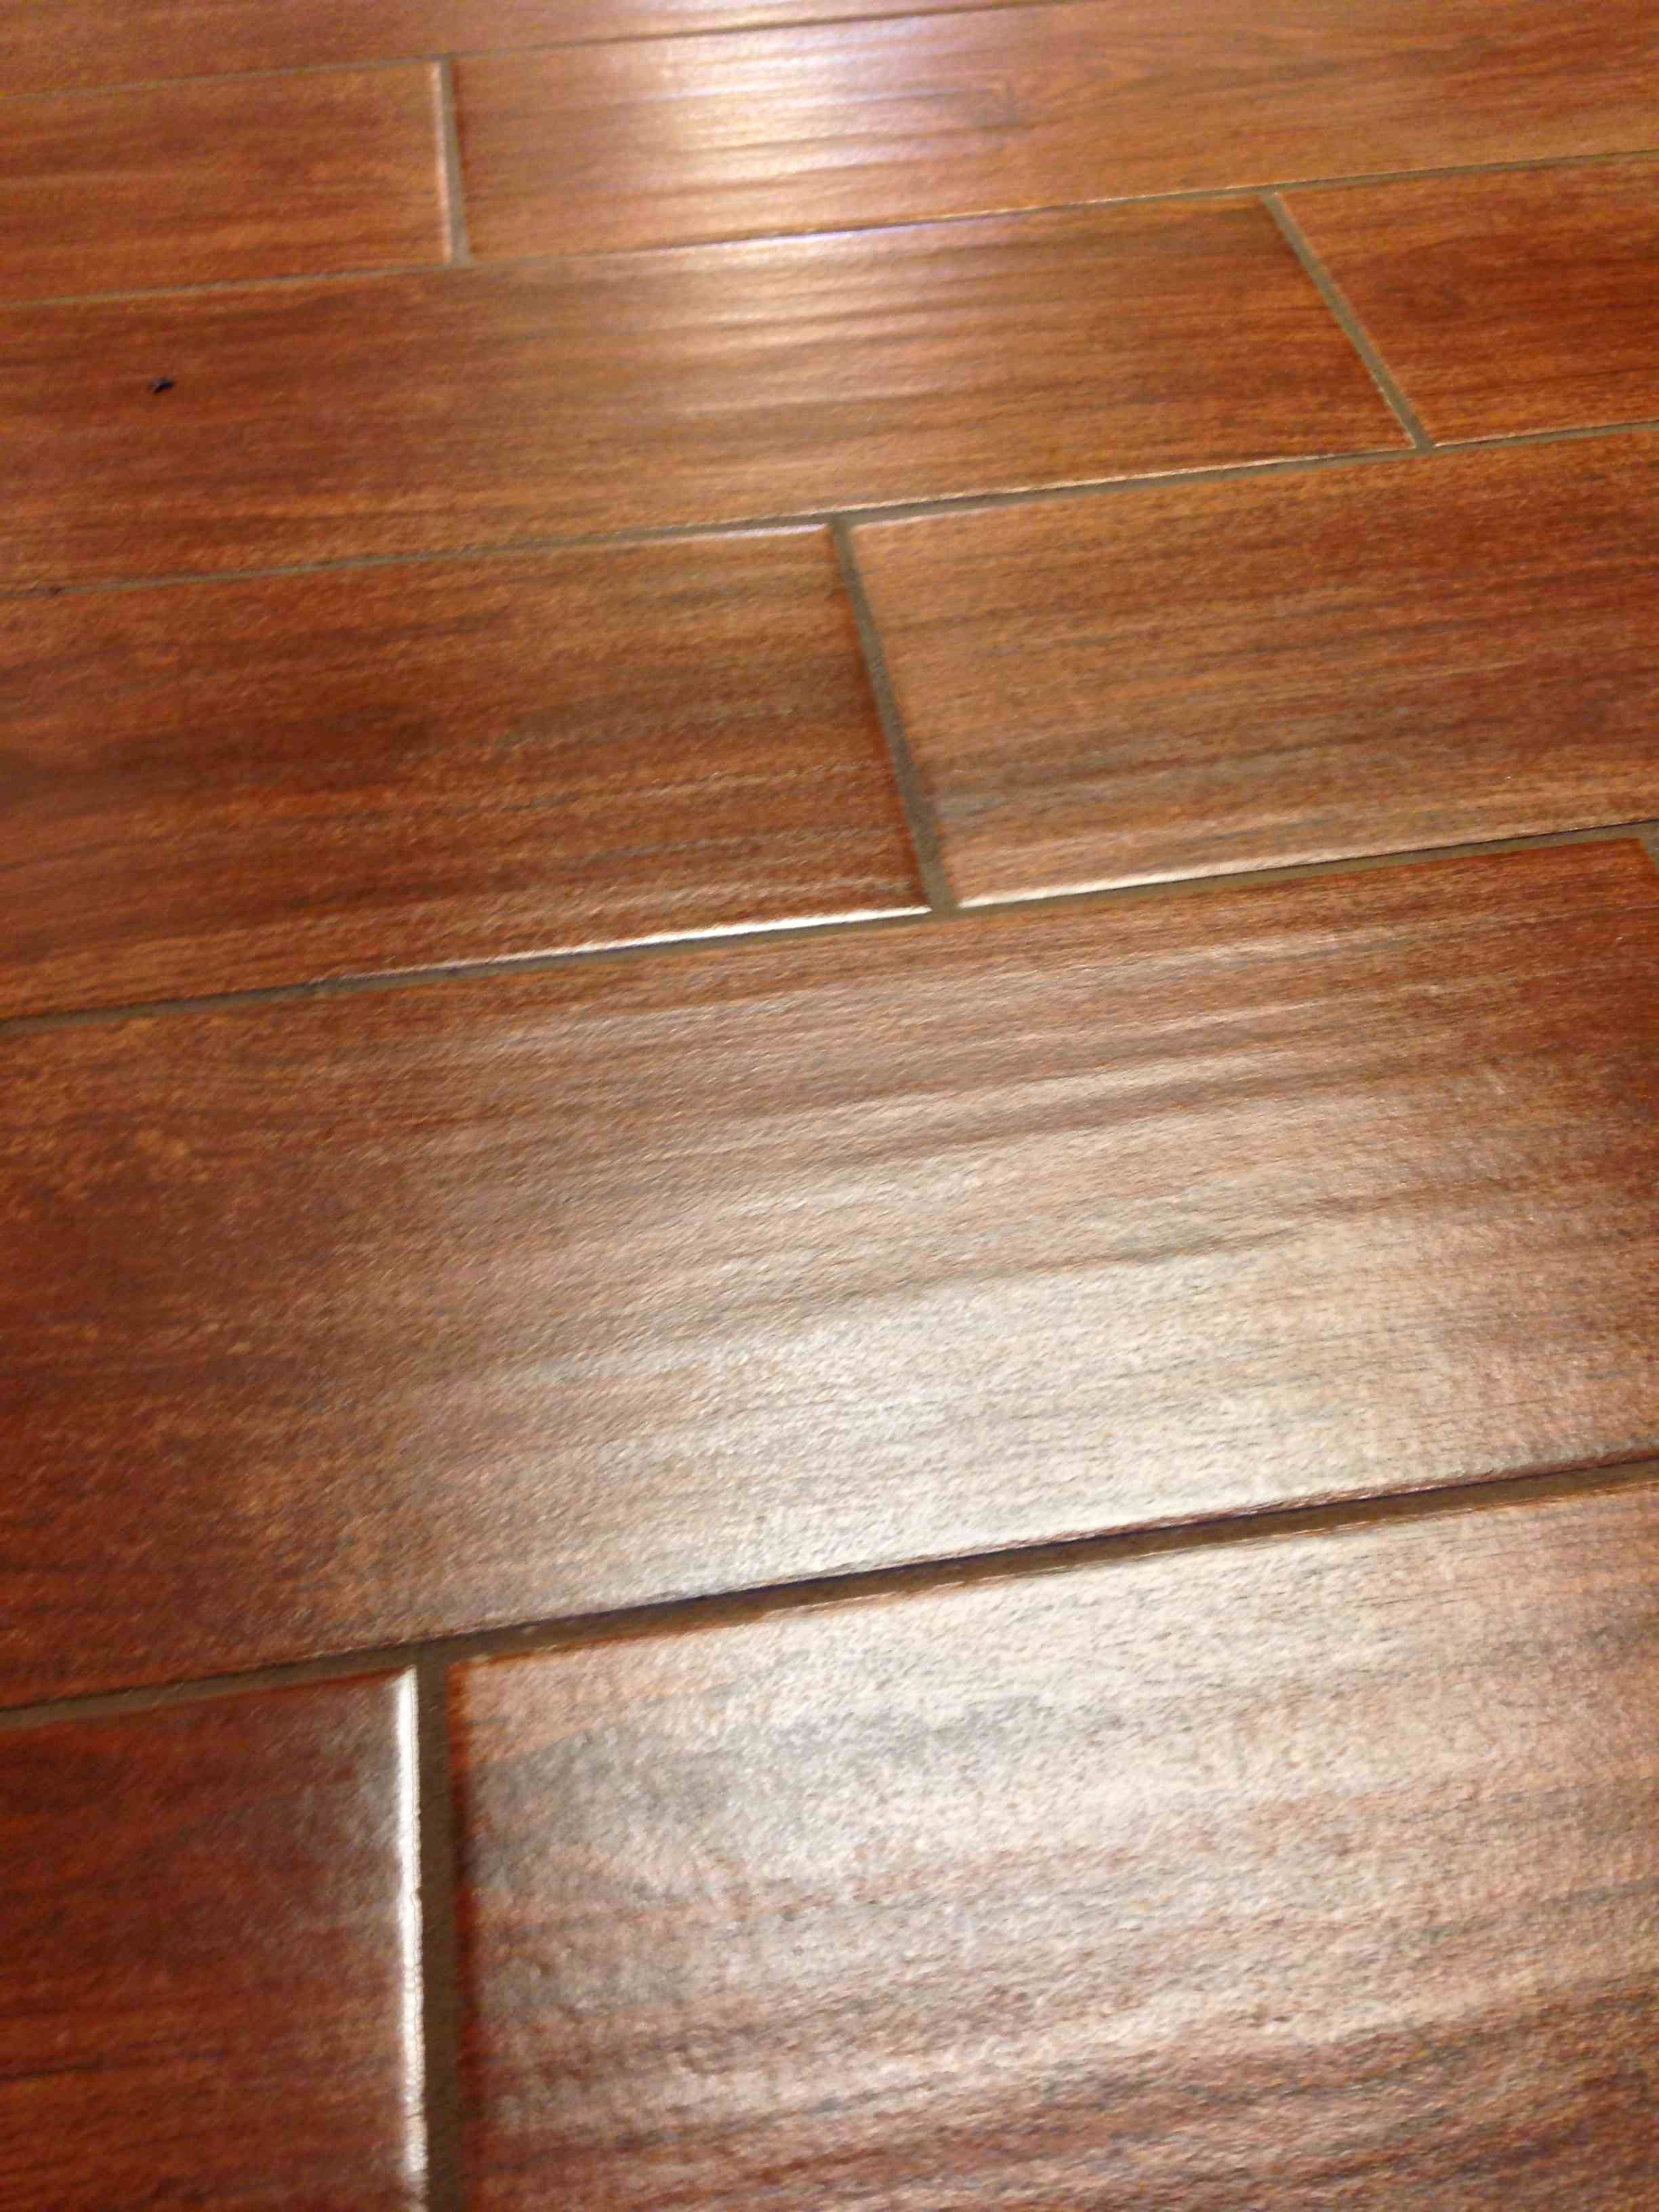 23 Nice Best Hardwood Floors to Buy 2024 free download best hardwood floors to buy of best hardwood floors floor plan ideas in harwood flooring best tile that looks like hardwood floors elegant i pinimg 736x 0d 7b